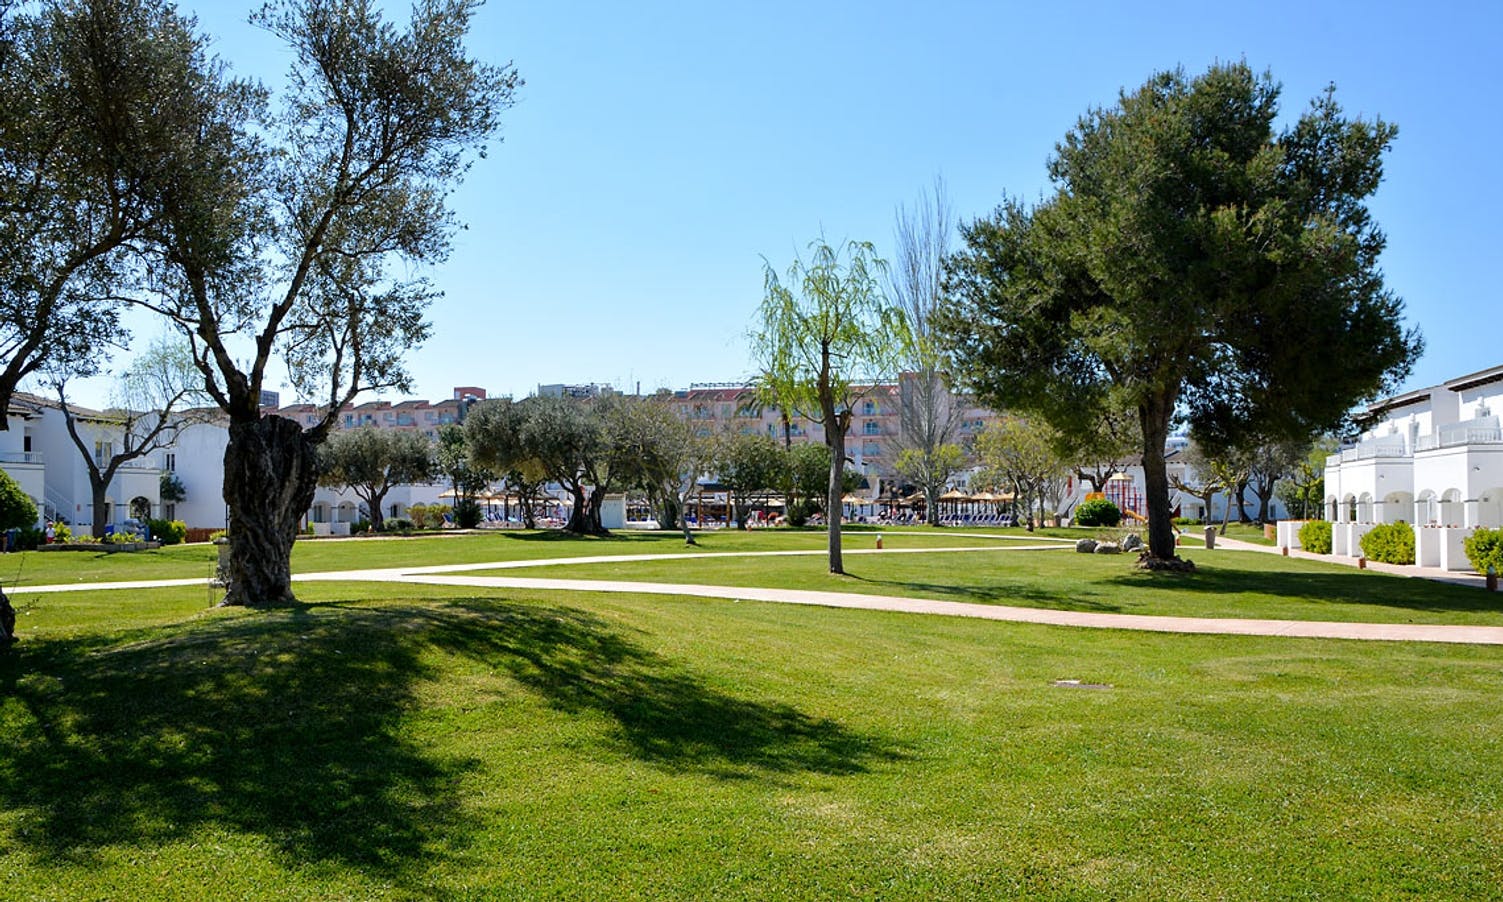 Dei har også parkar å trena i. (Foto: Camp Mallorca, A.K. Berge)